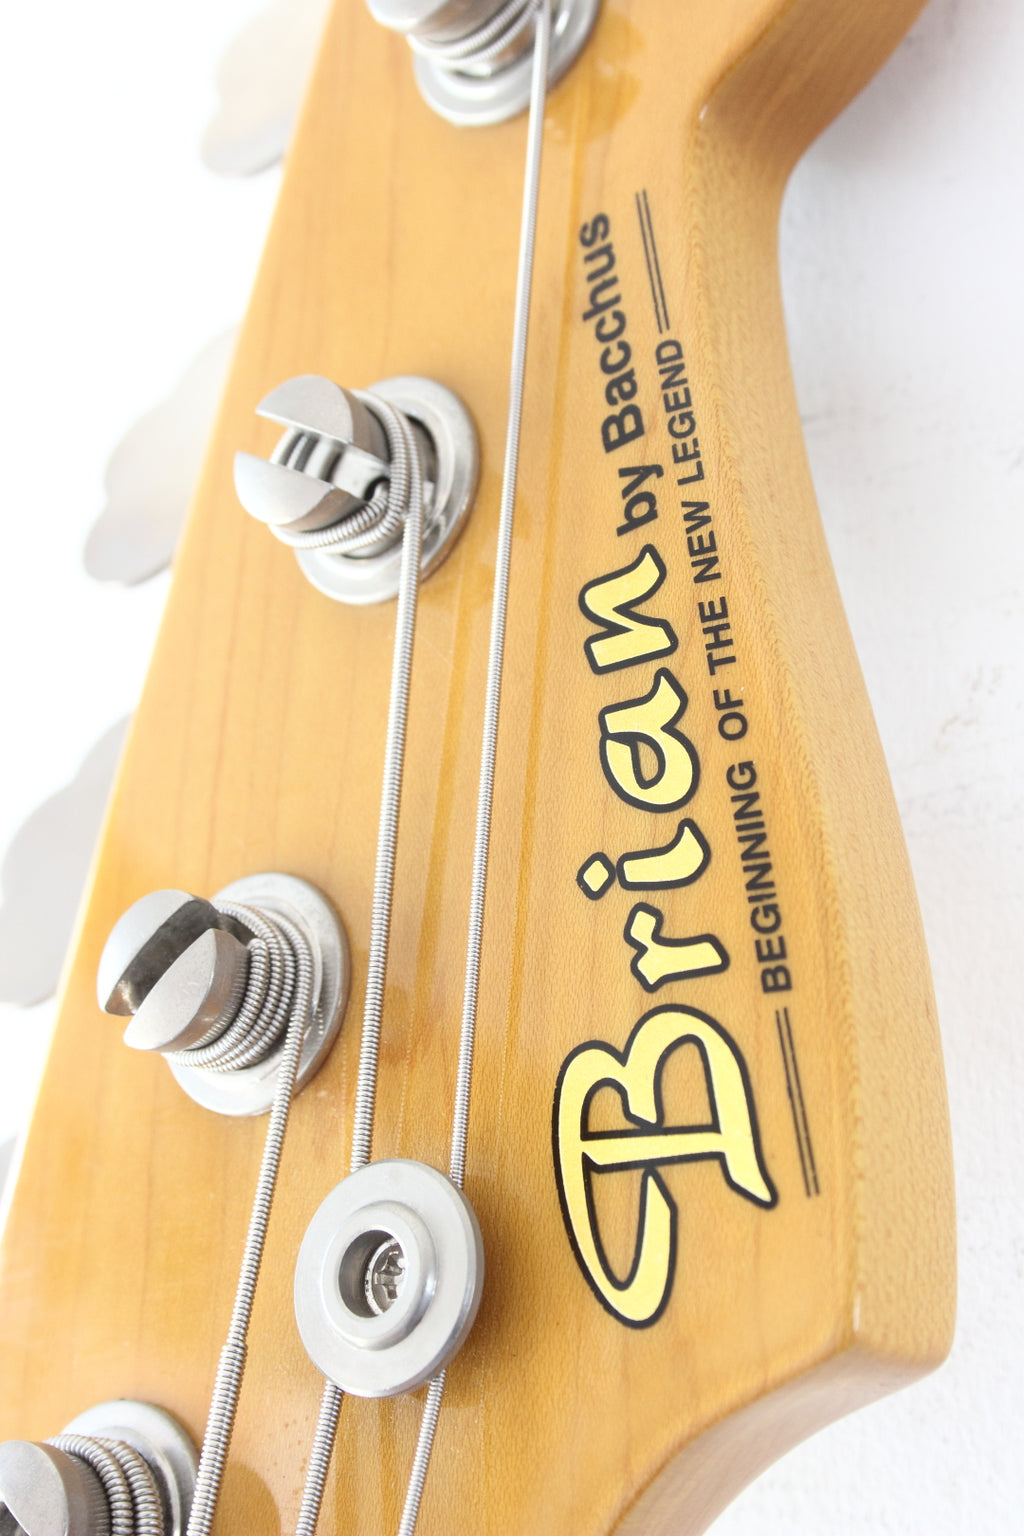 Brian by Bacchus JB-Style Seafoam Green 90s – Topshelf Instruments